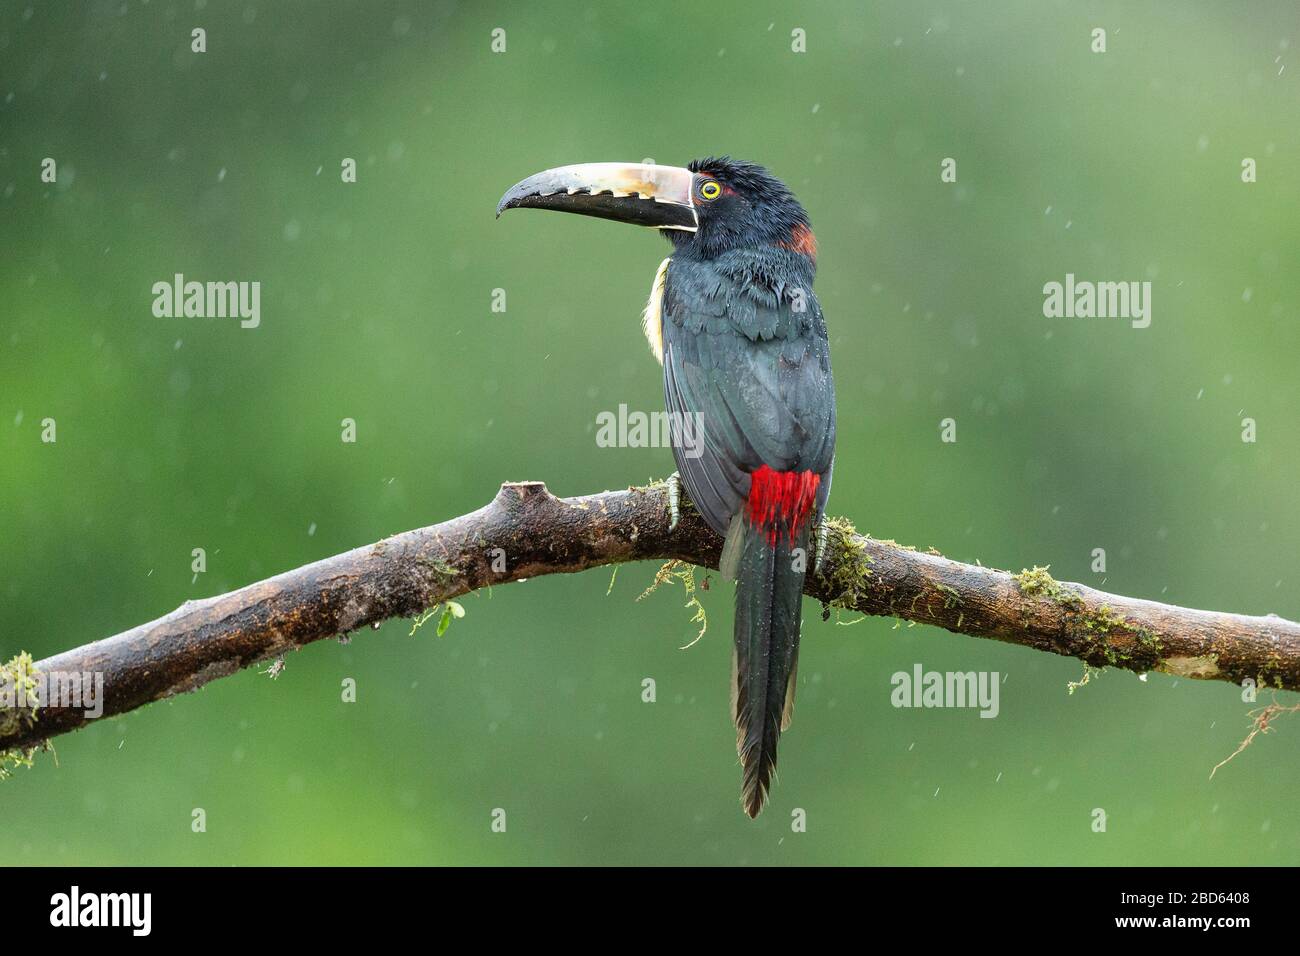 A Collared Aracari (Pteroglossus torquatus) perched on a branch in Costa Rica rainforest Stock Photo